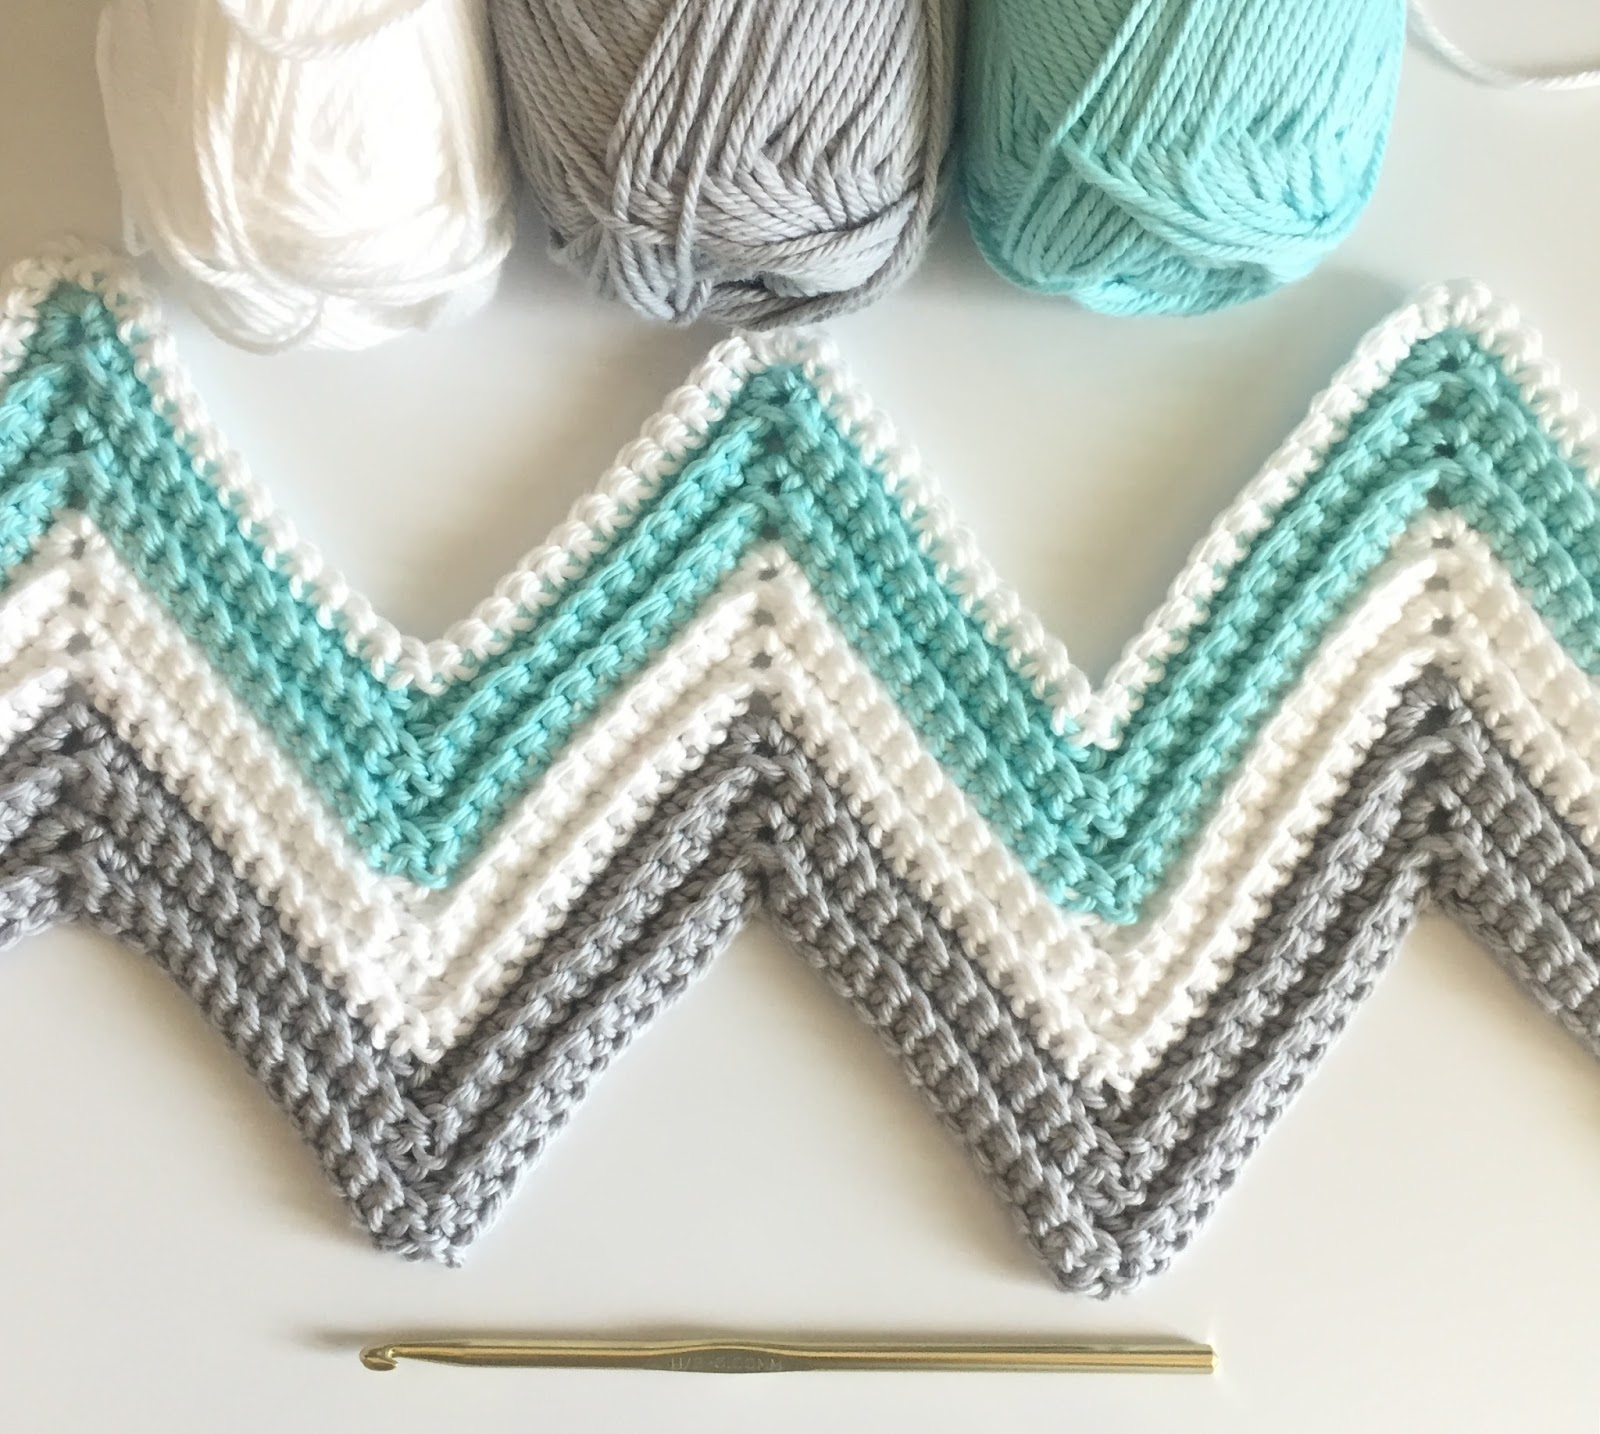 Crochet Ripple Afghan Patterns Single Crochet Chevron Blanket In Mint Gray And White Daisy Farm